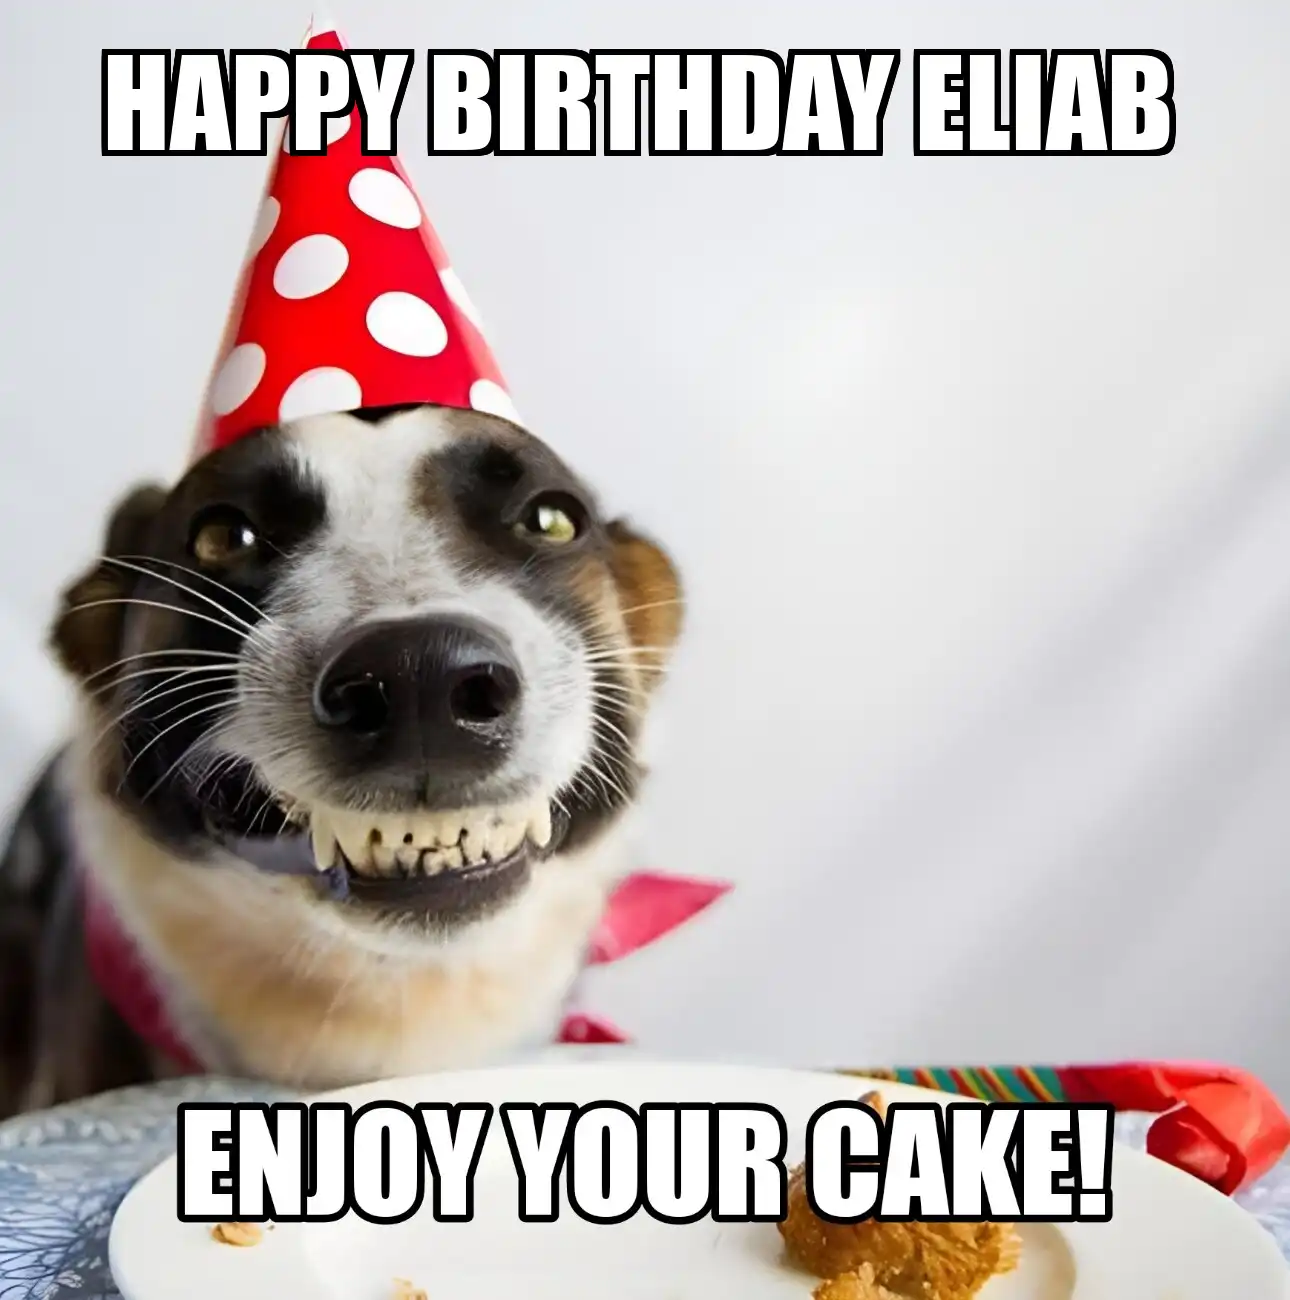 Happy Birthday Eliab Enjoy Your Cake Dog Meme